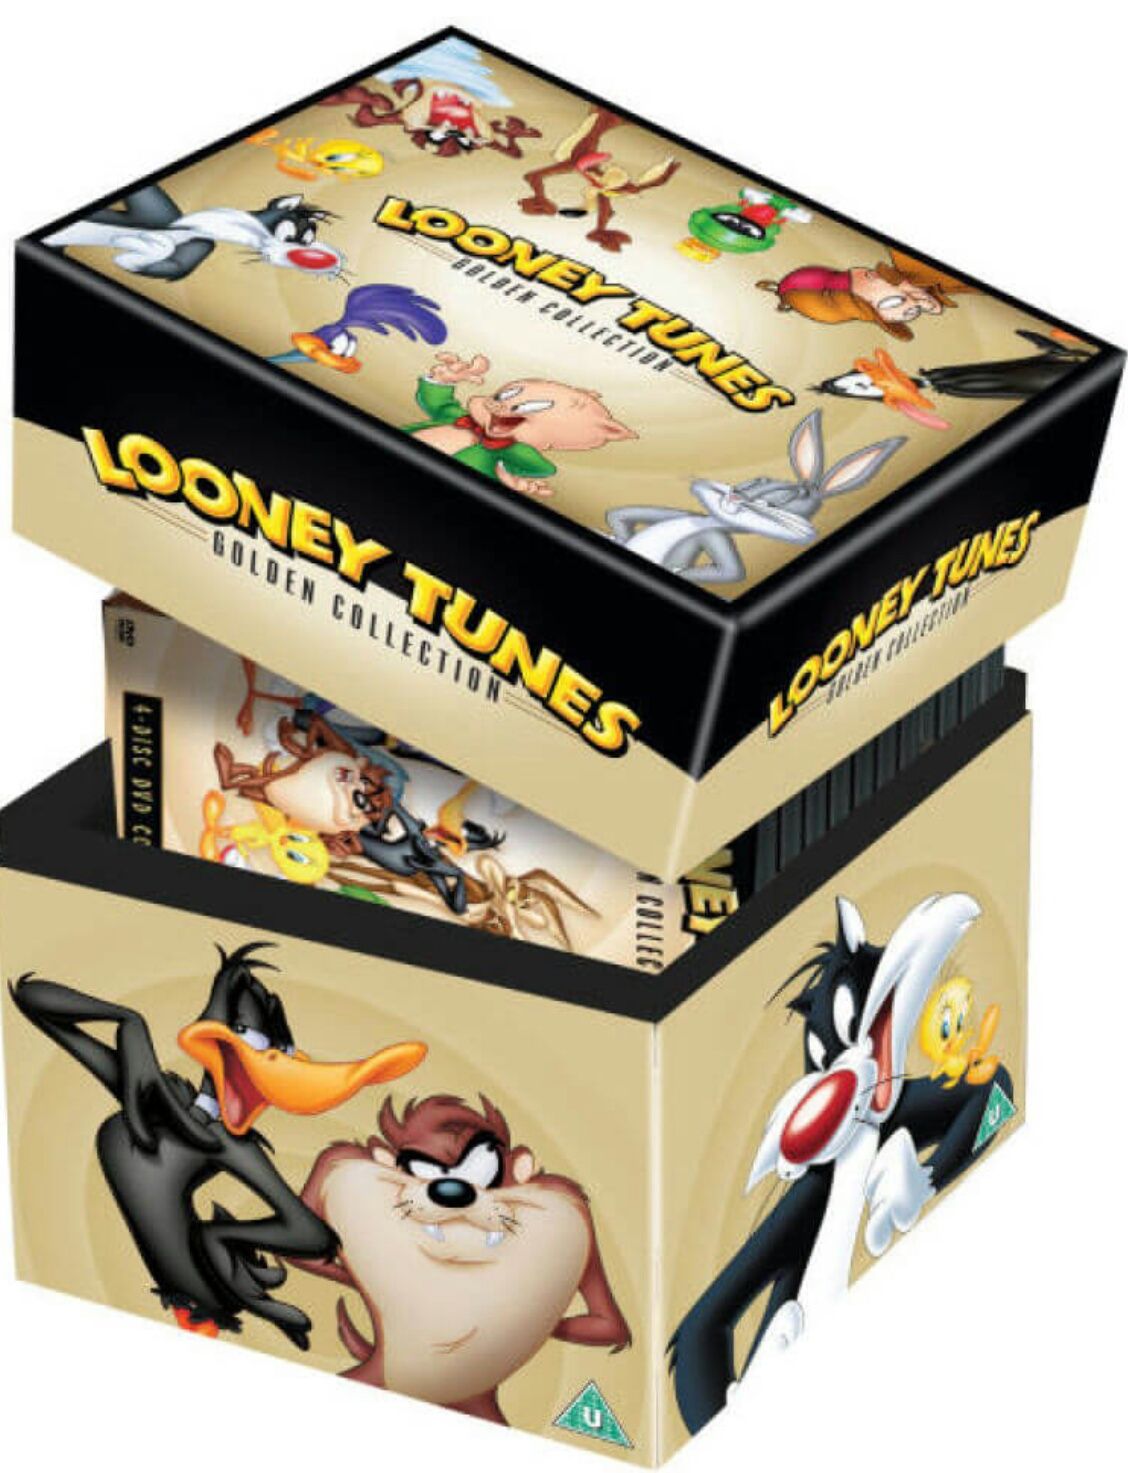 Desene Animate Looney Tunes: Golden Collection DVD Box Set Volumes 1-6